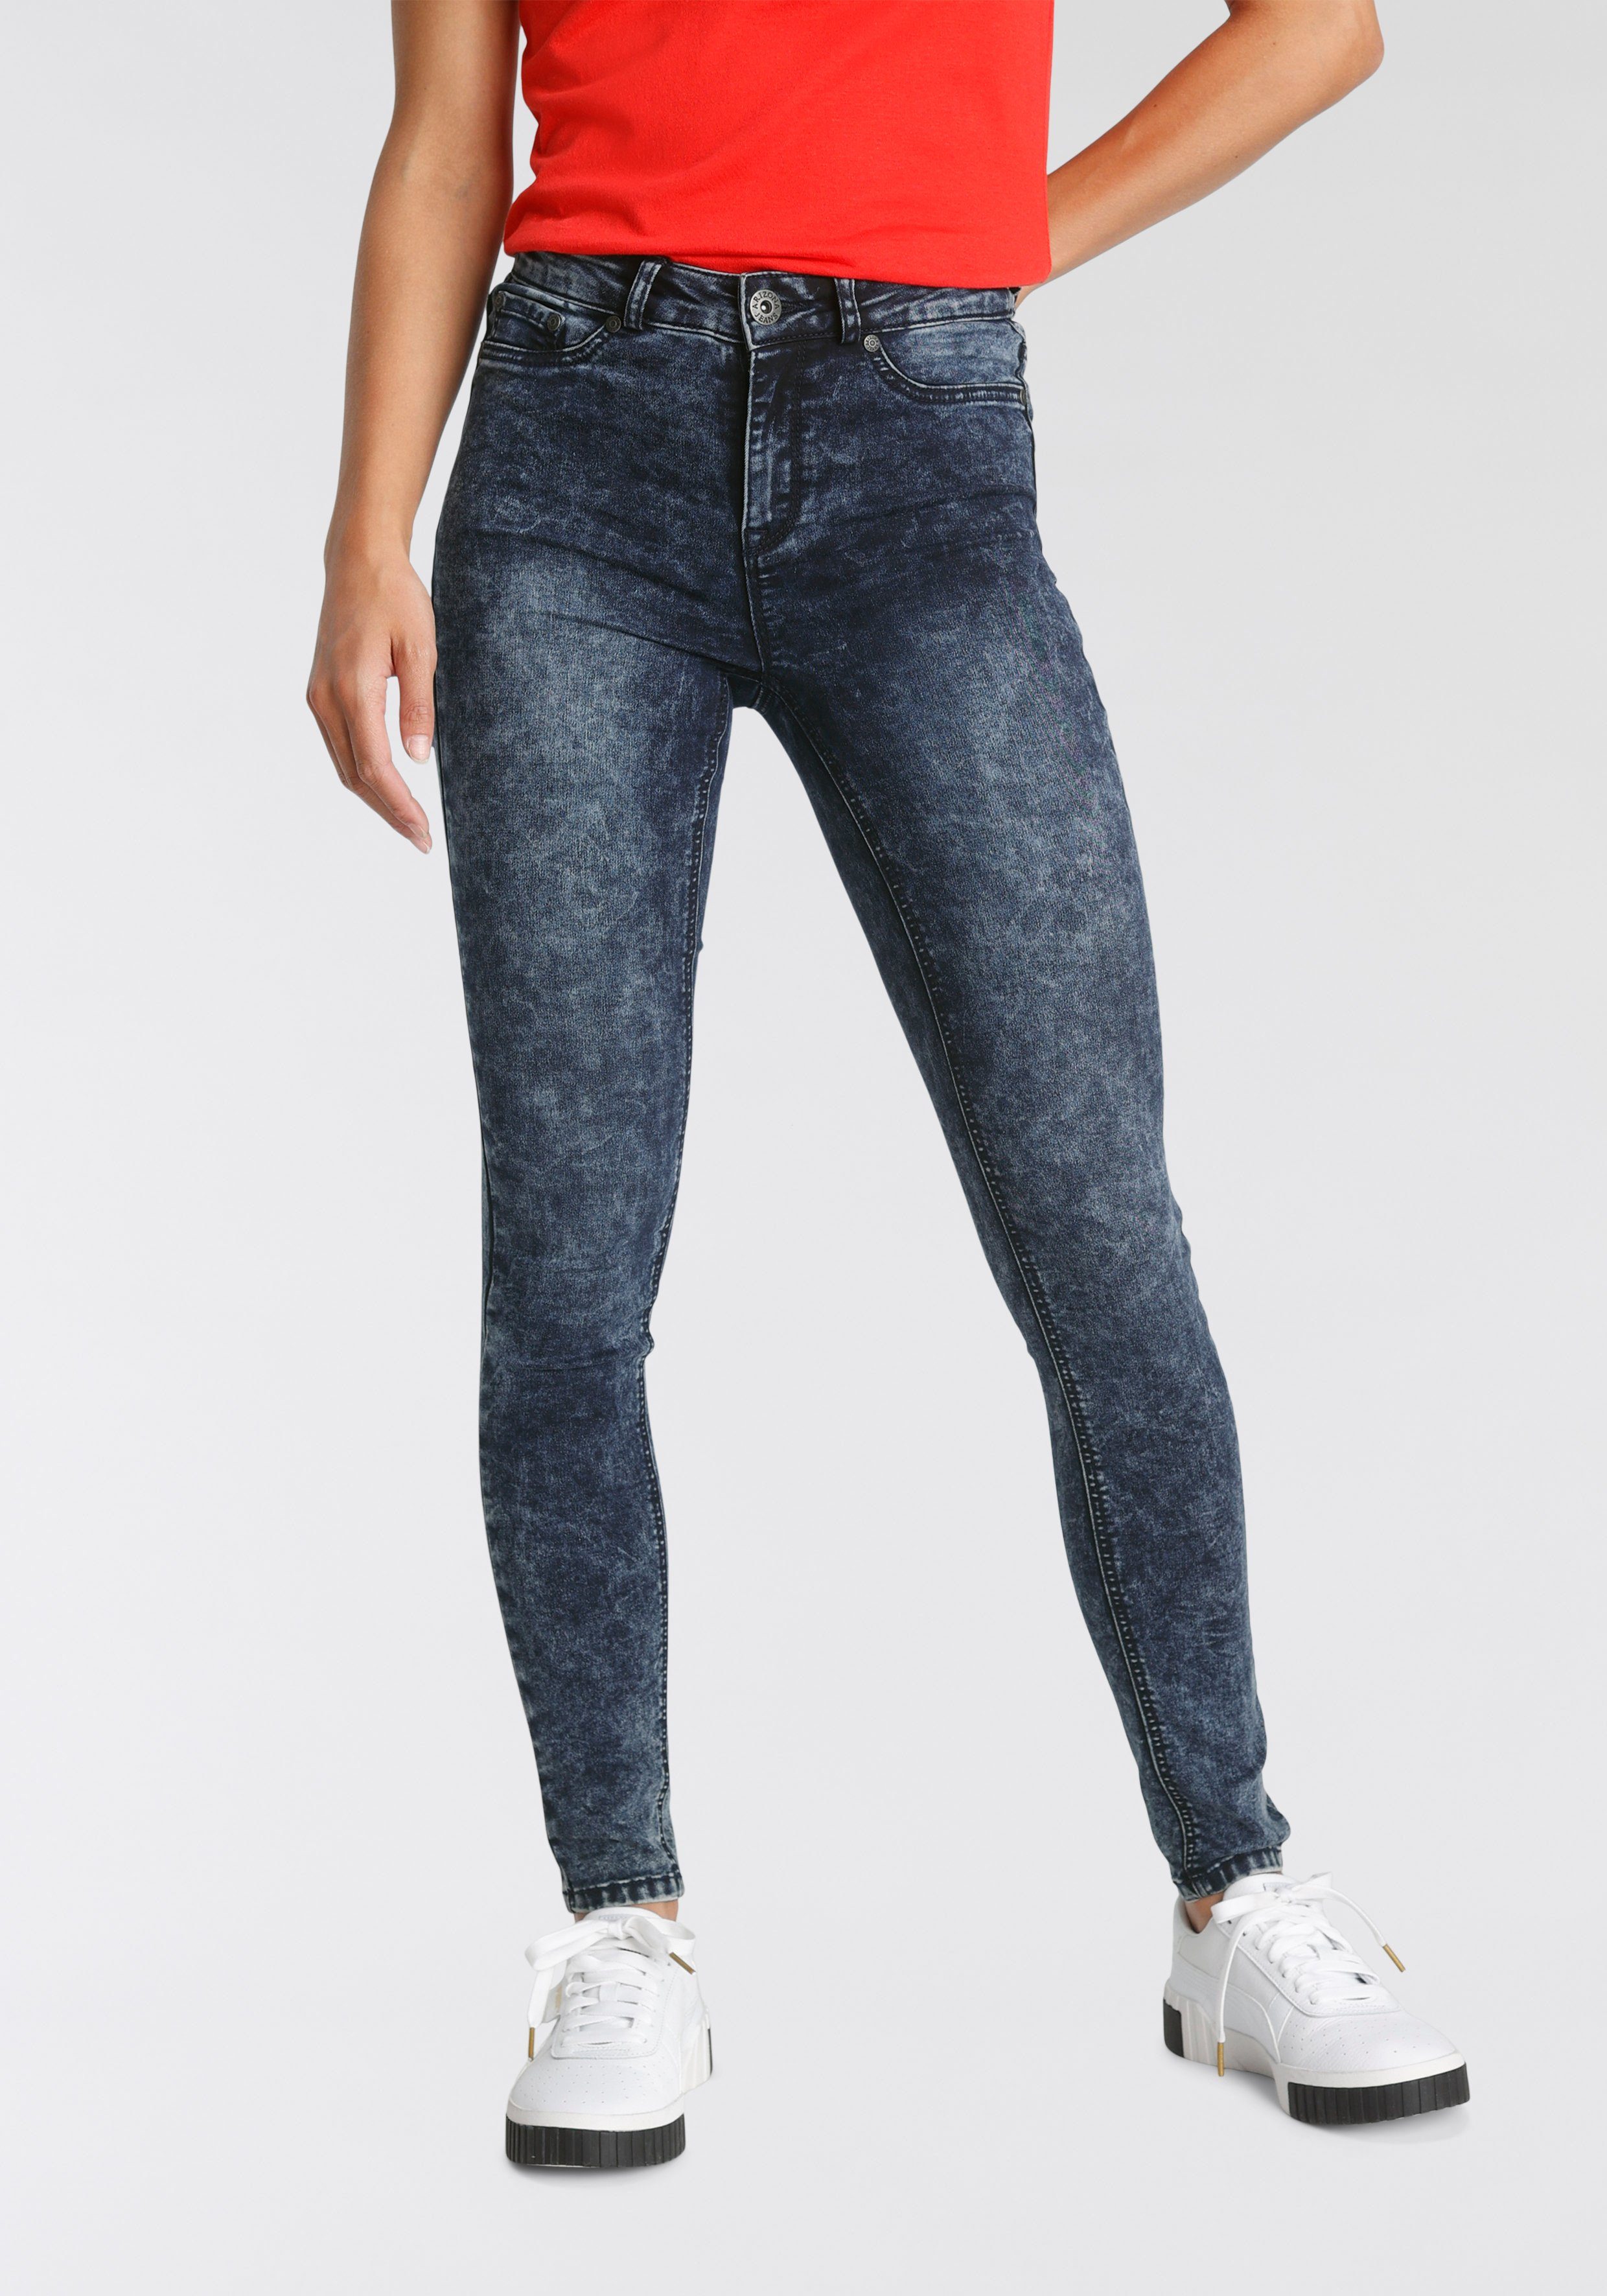 Arizona Skinny fit moon Moonwashed OTTO | jeans Ultra washed jeans Stretch gevonden makkelijk